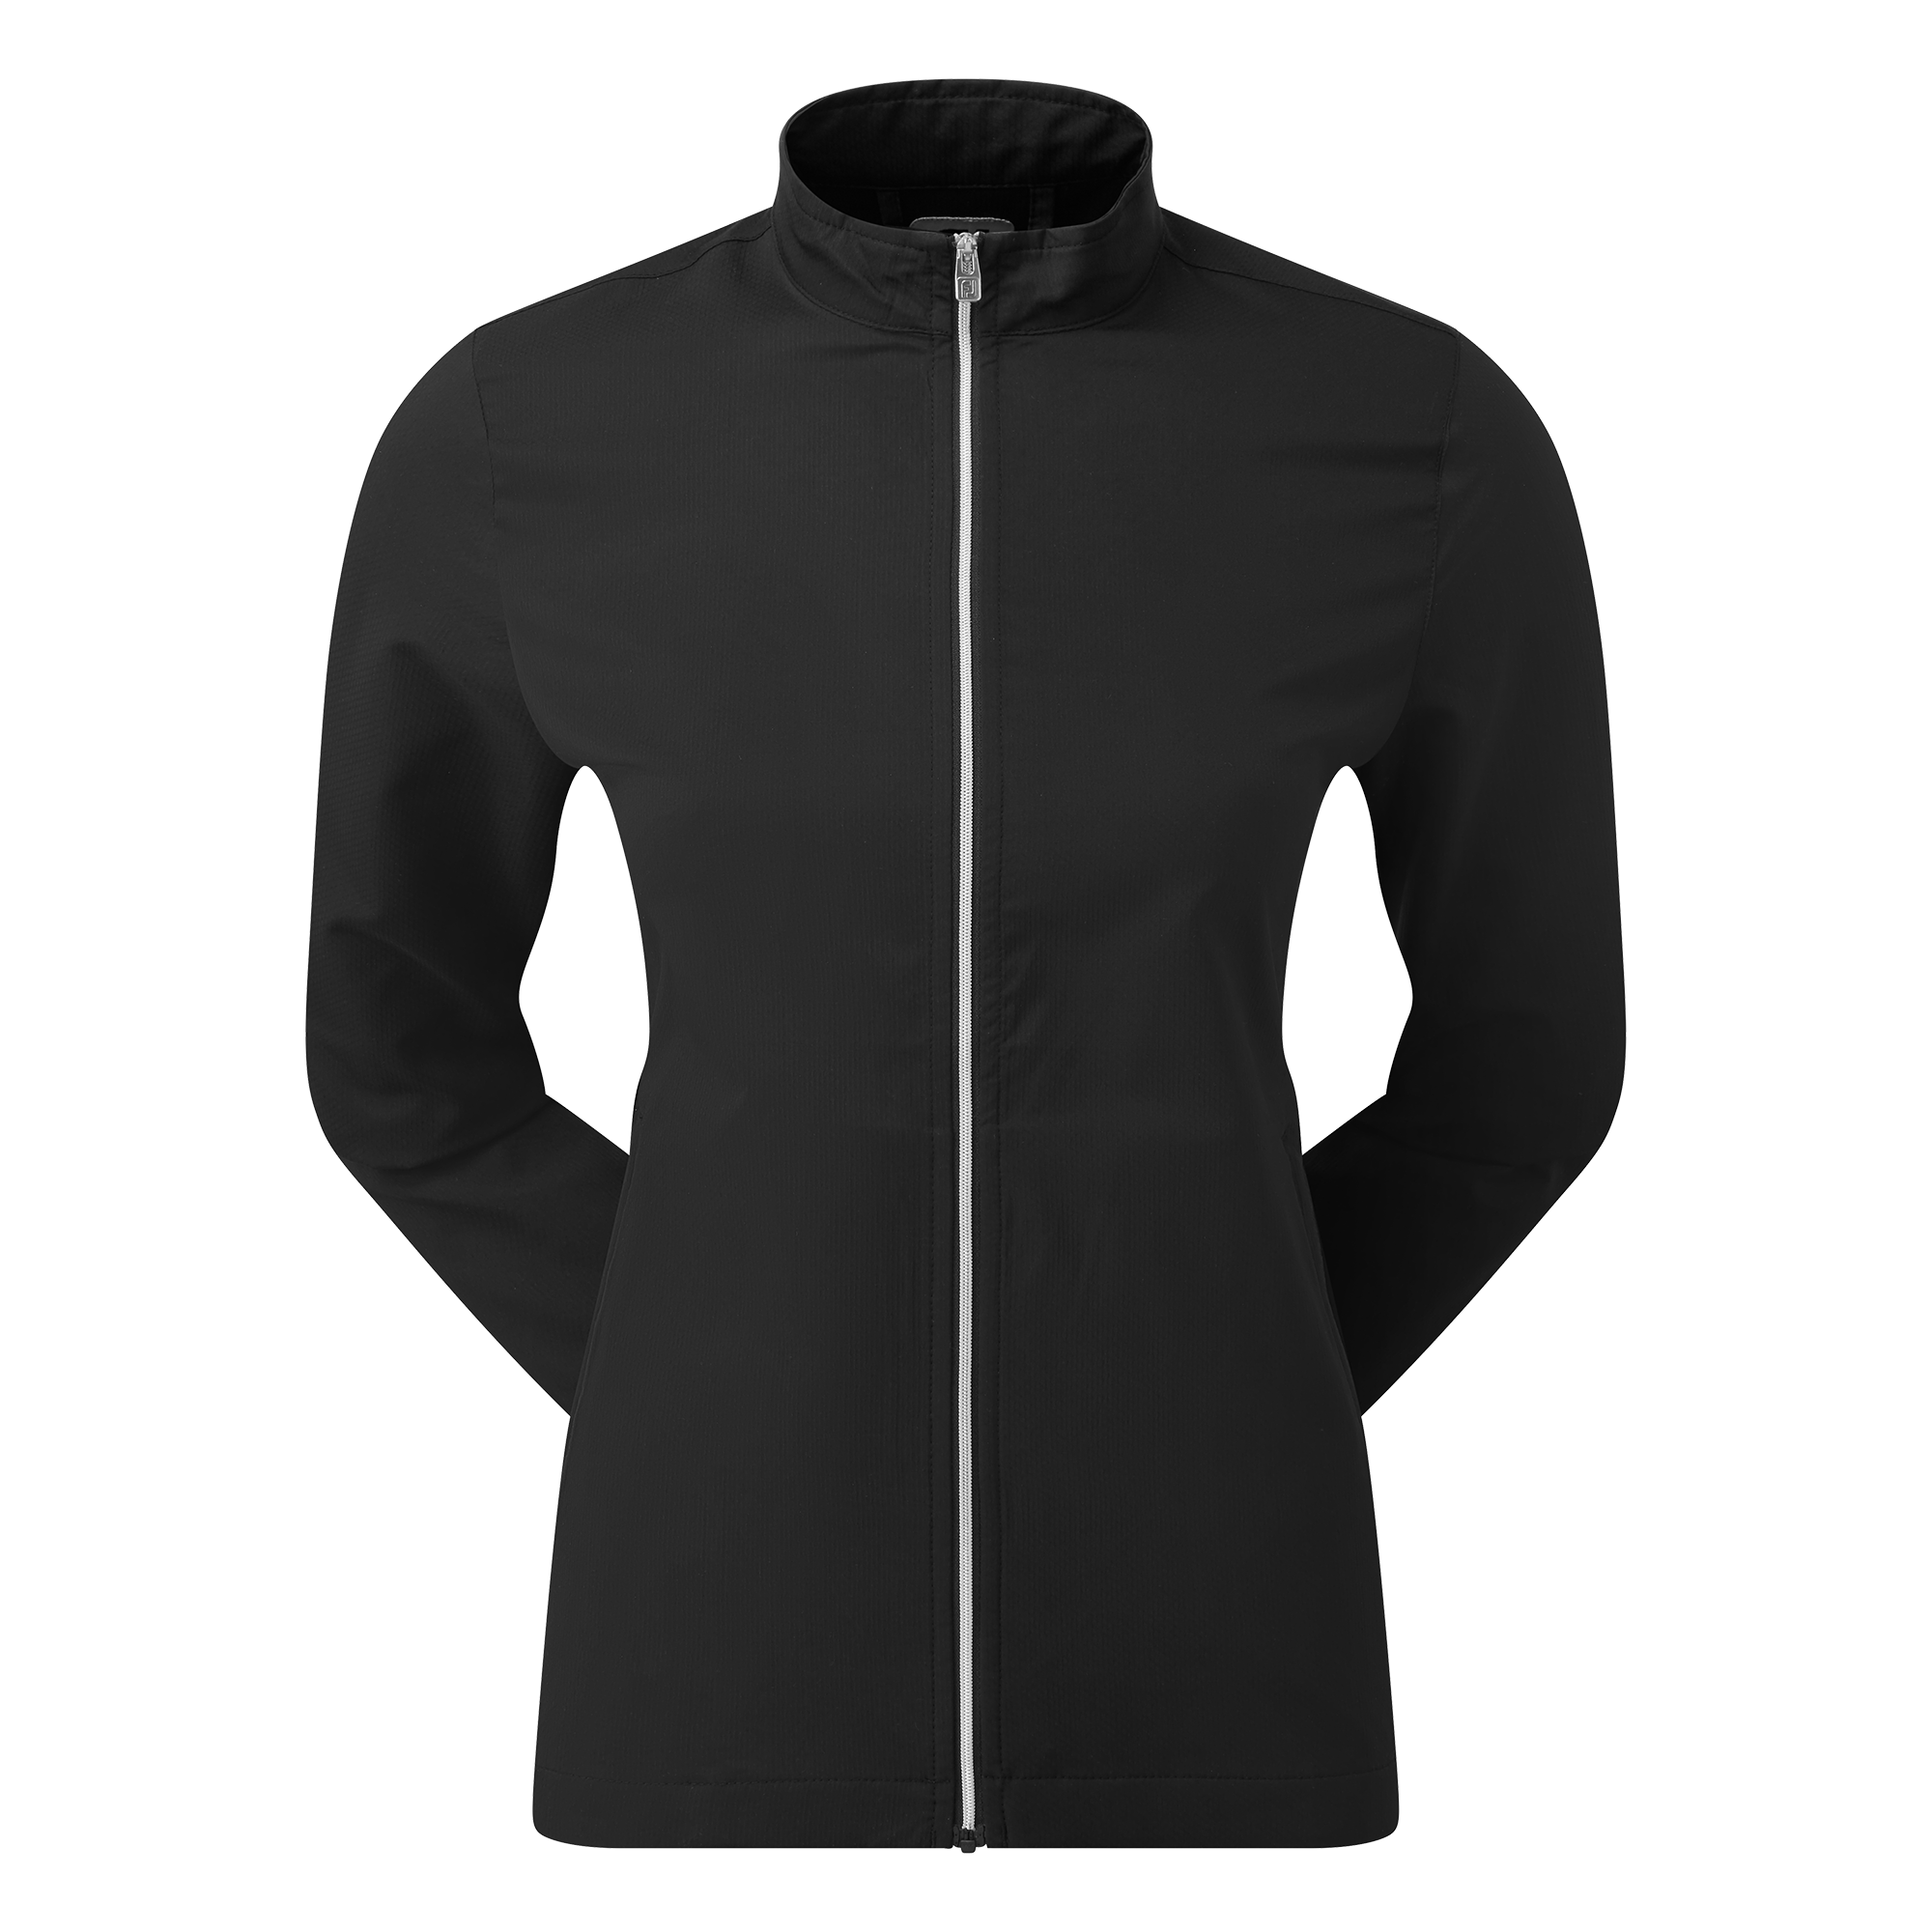 FootJoy Full-Zip Wind Shirt dámská bunda, černá, vel. L